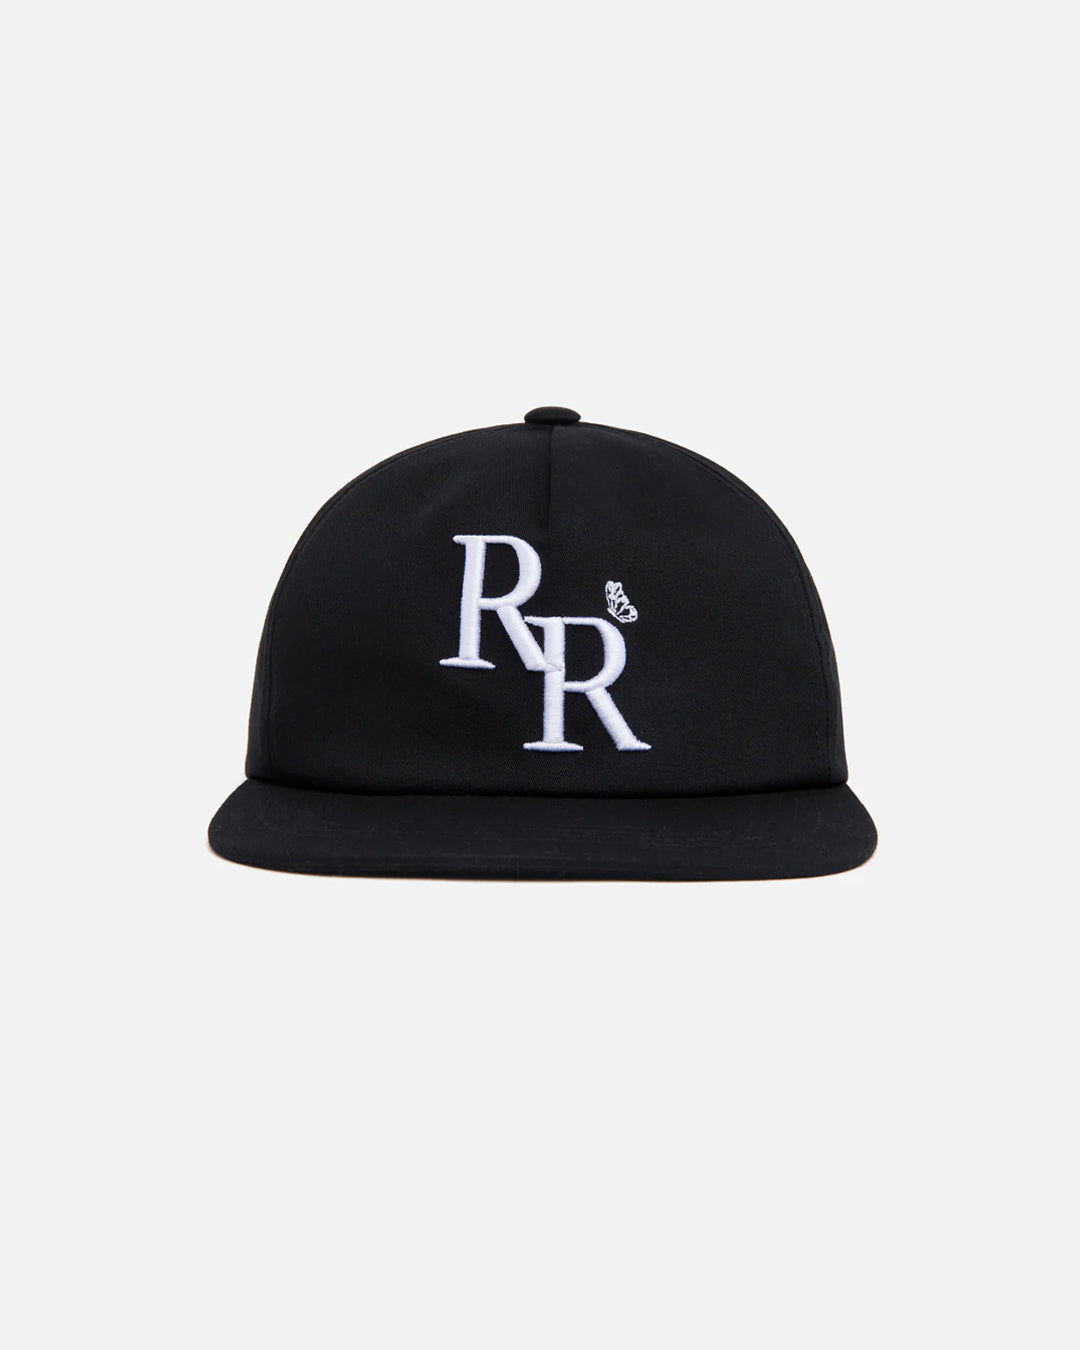 RR HAT- BLACK